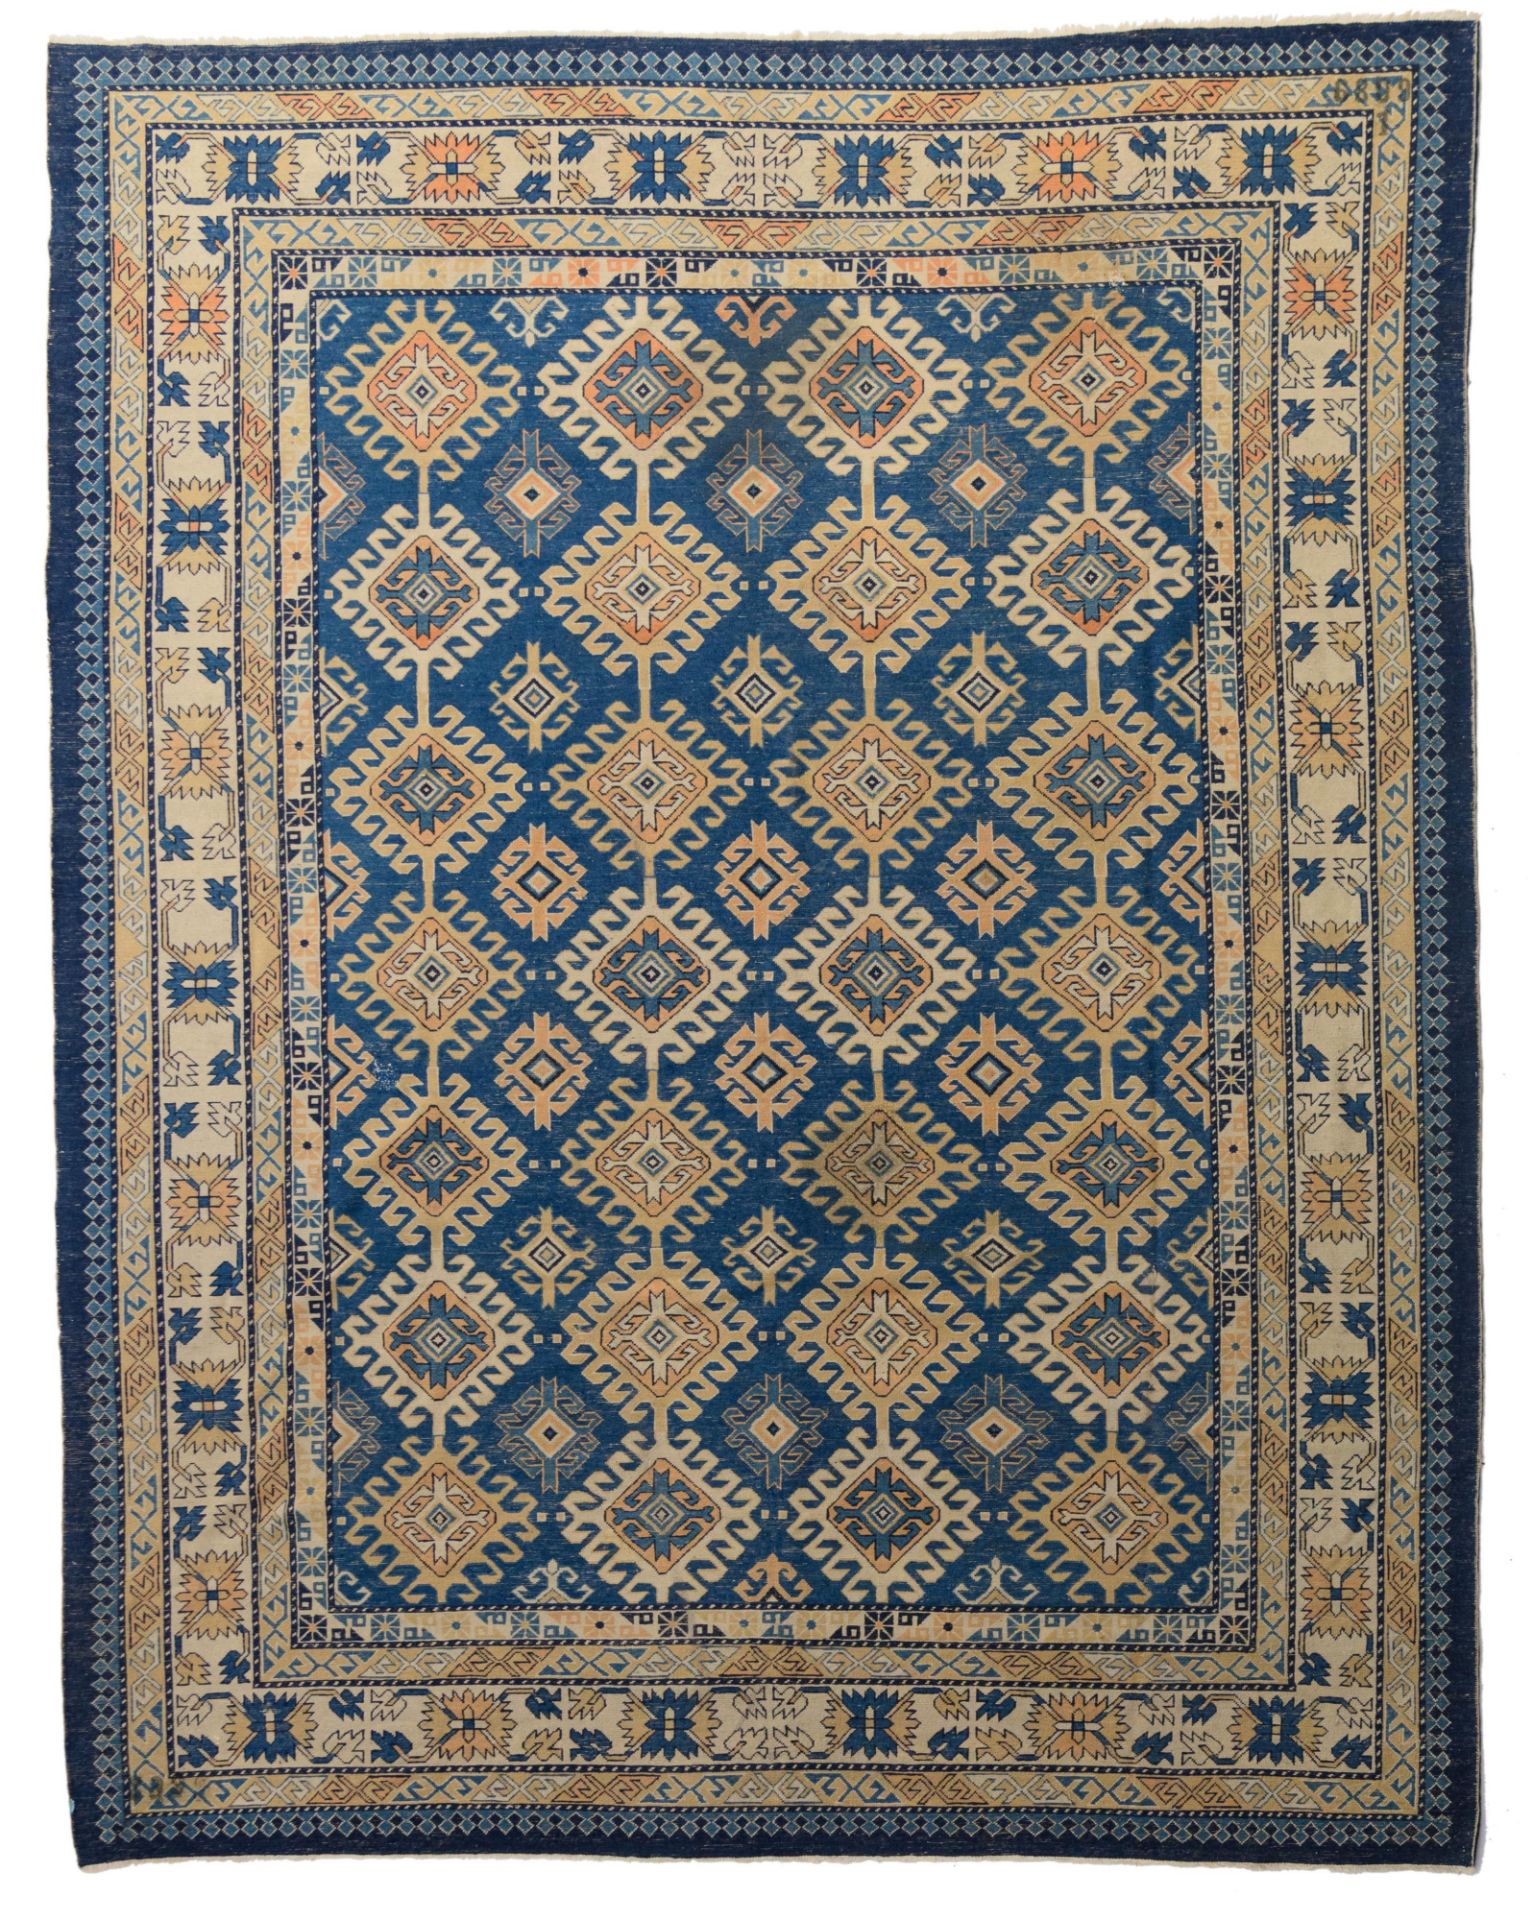 An Oriental carpet, Uzbek inspired design, wool on wool, ca 1940, 276 x 351 cm - Image 2 of 10